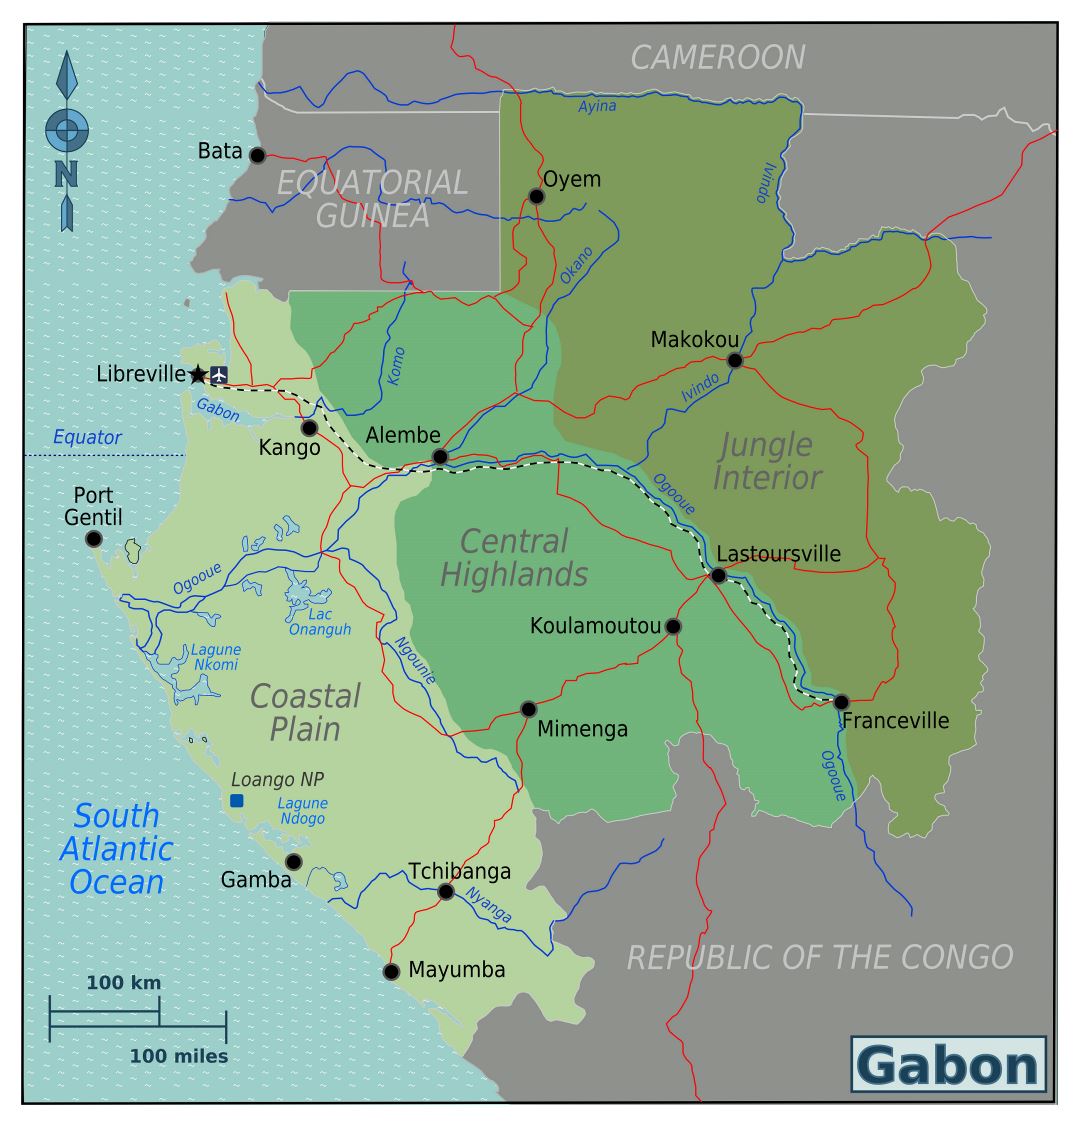 Large regions map of Gabon